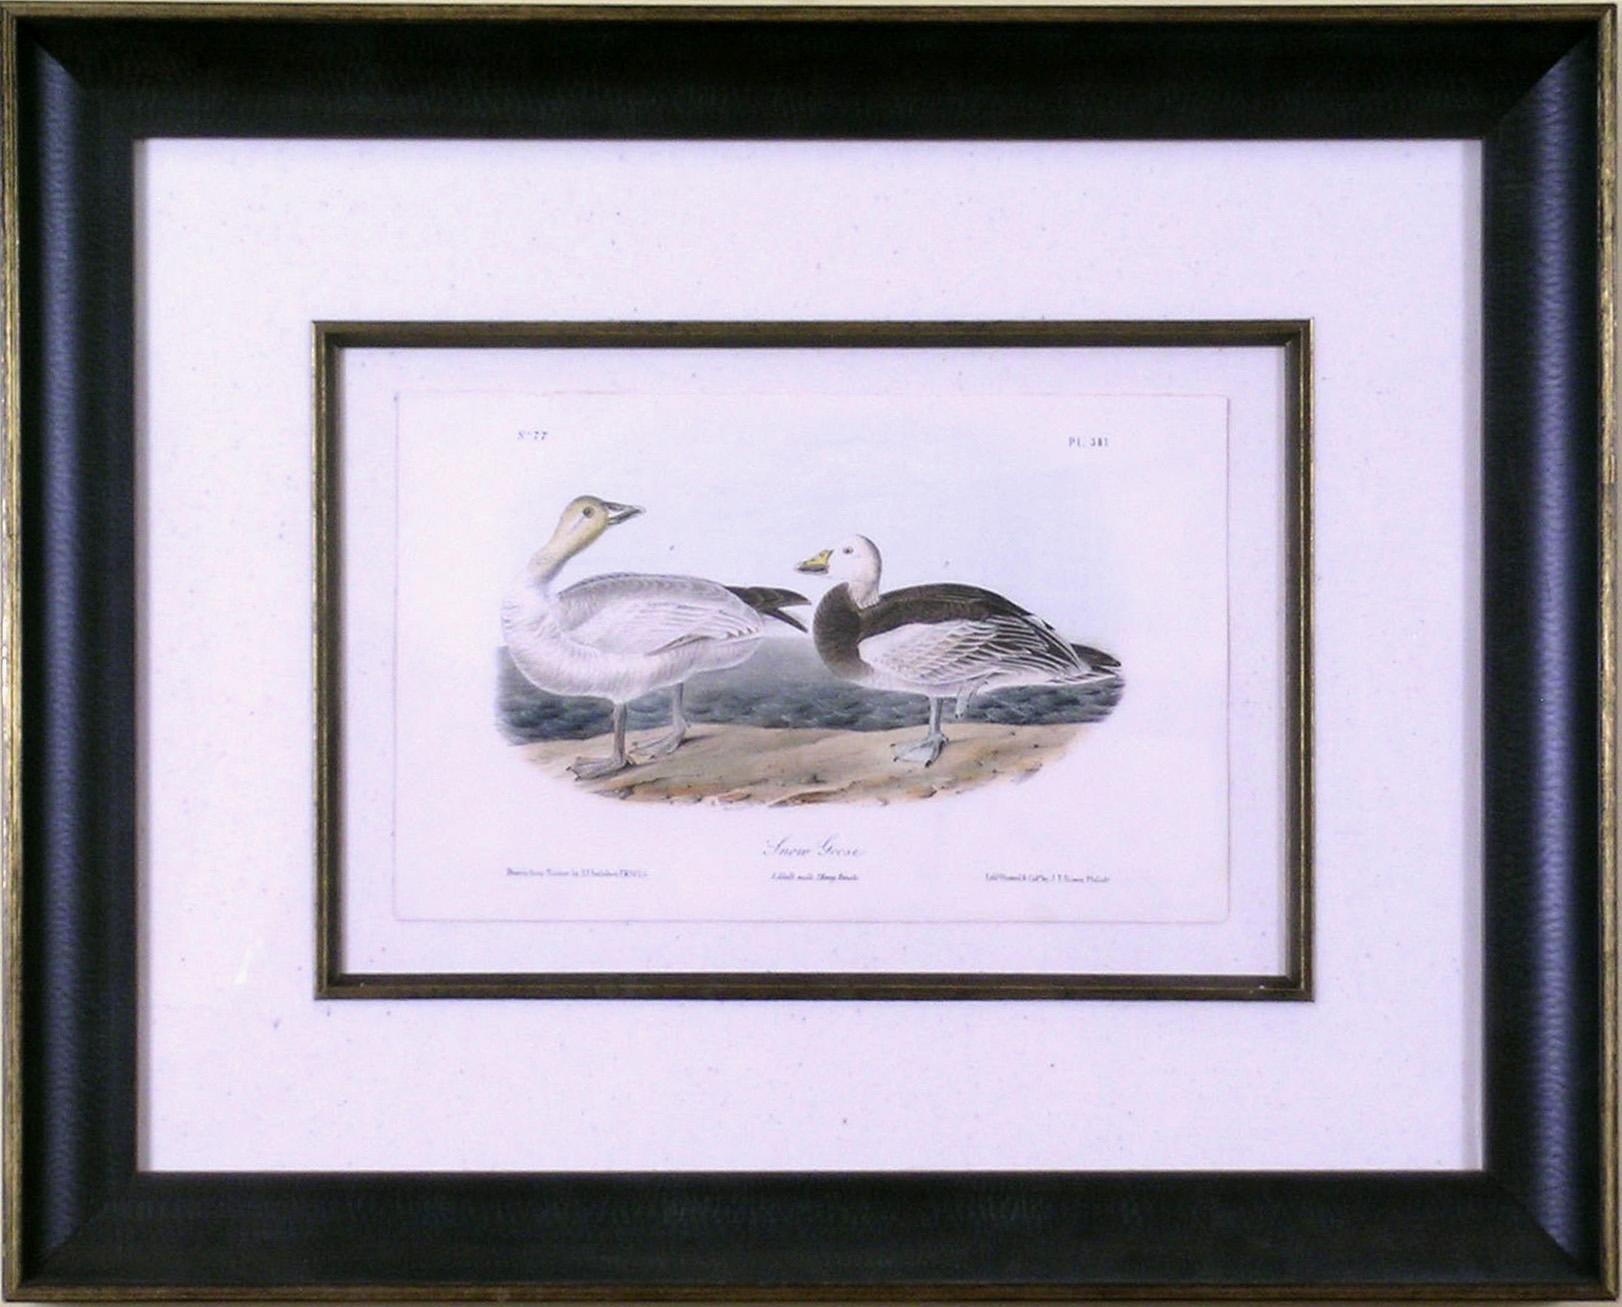 Snow Goose - Academic Print by John James Audubon